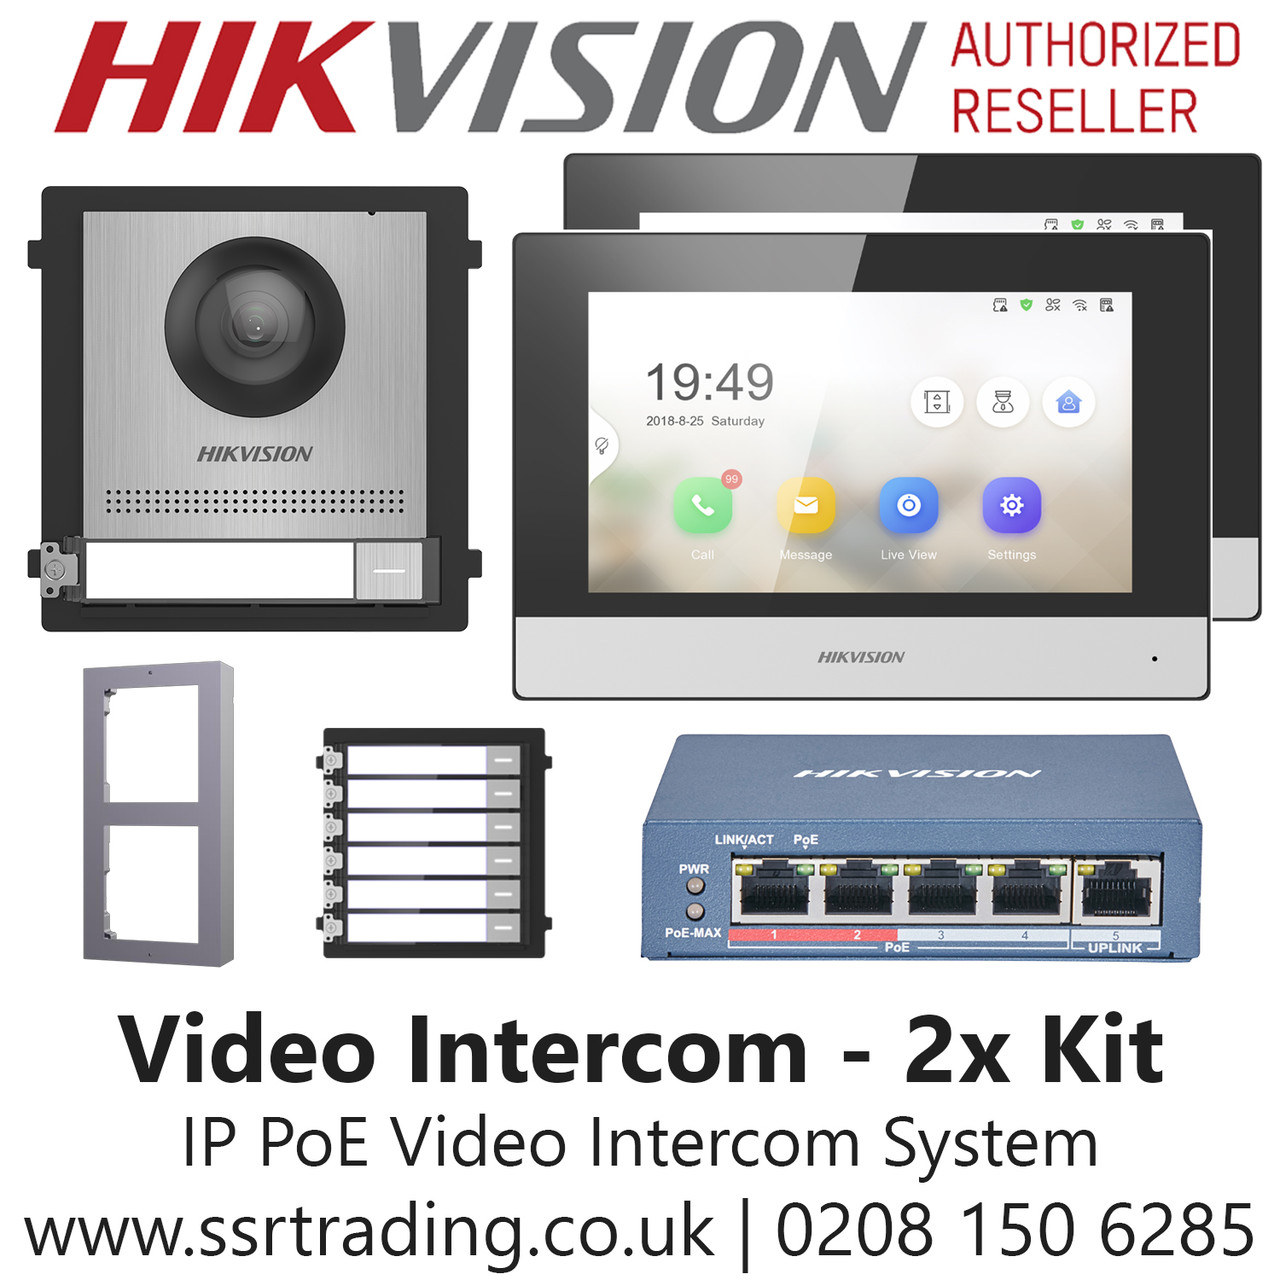 Video Intercom - Products - Hikvision